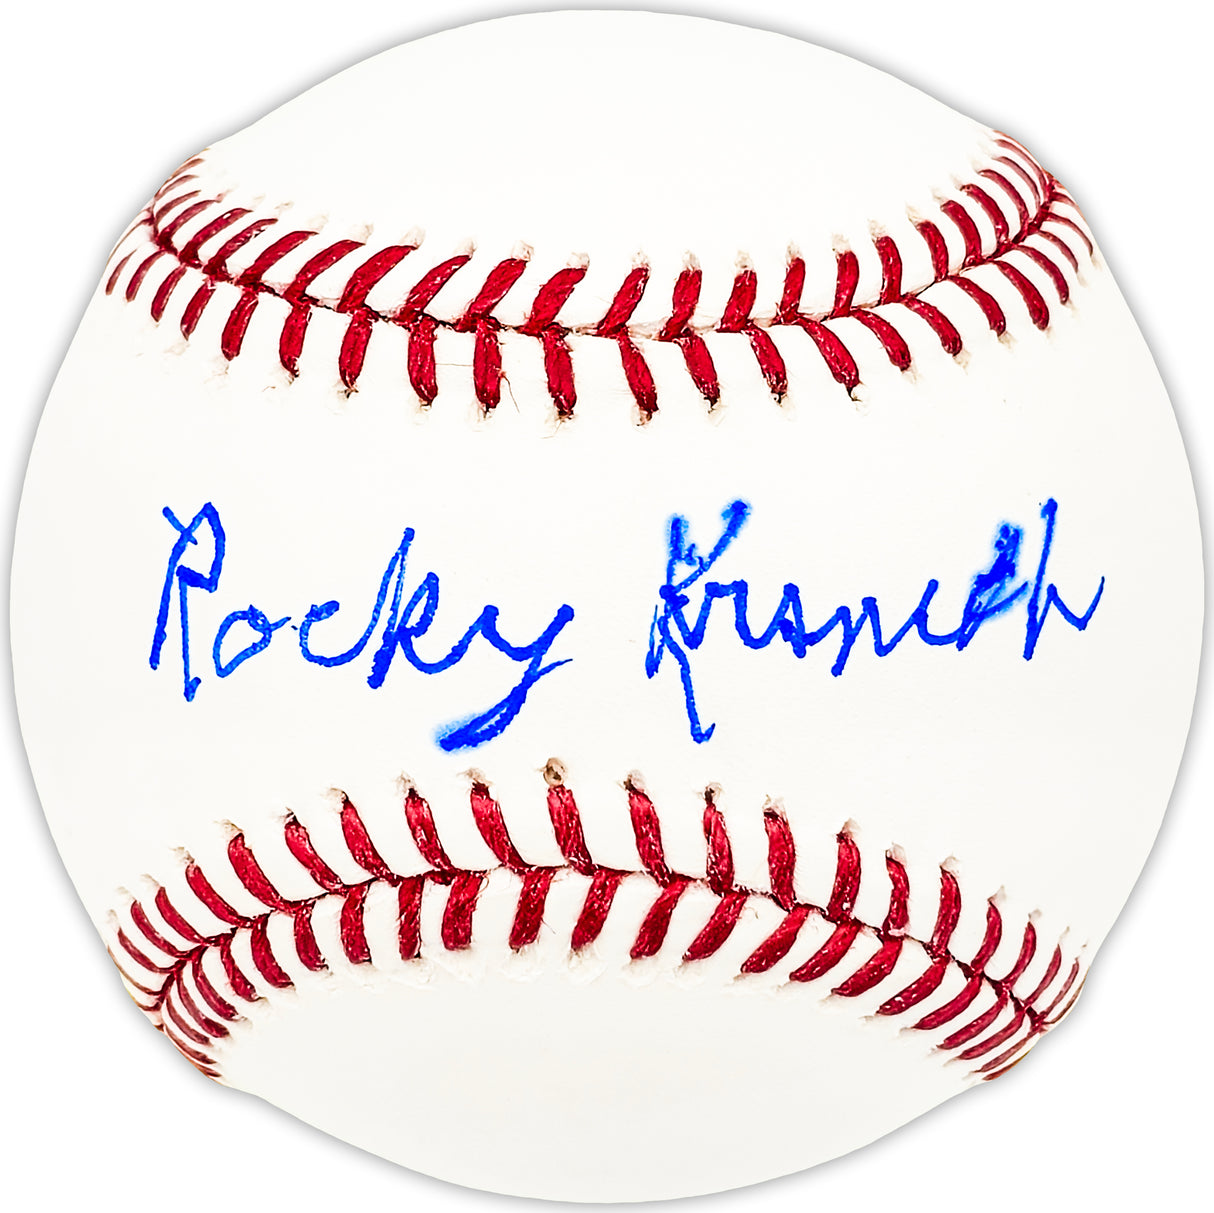 Rocky Krsnich Autographed Official MLB Baseball Chicago White Sox Beckett BAS QR #BM25029